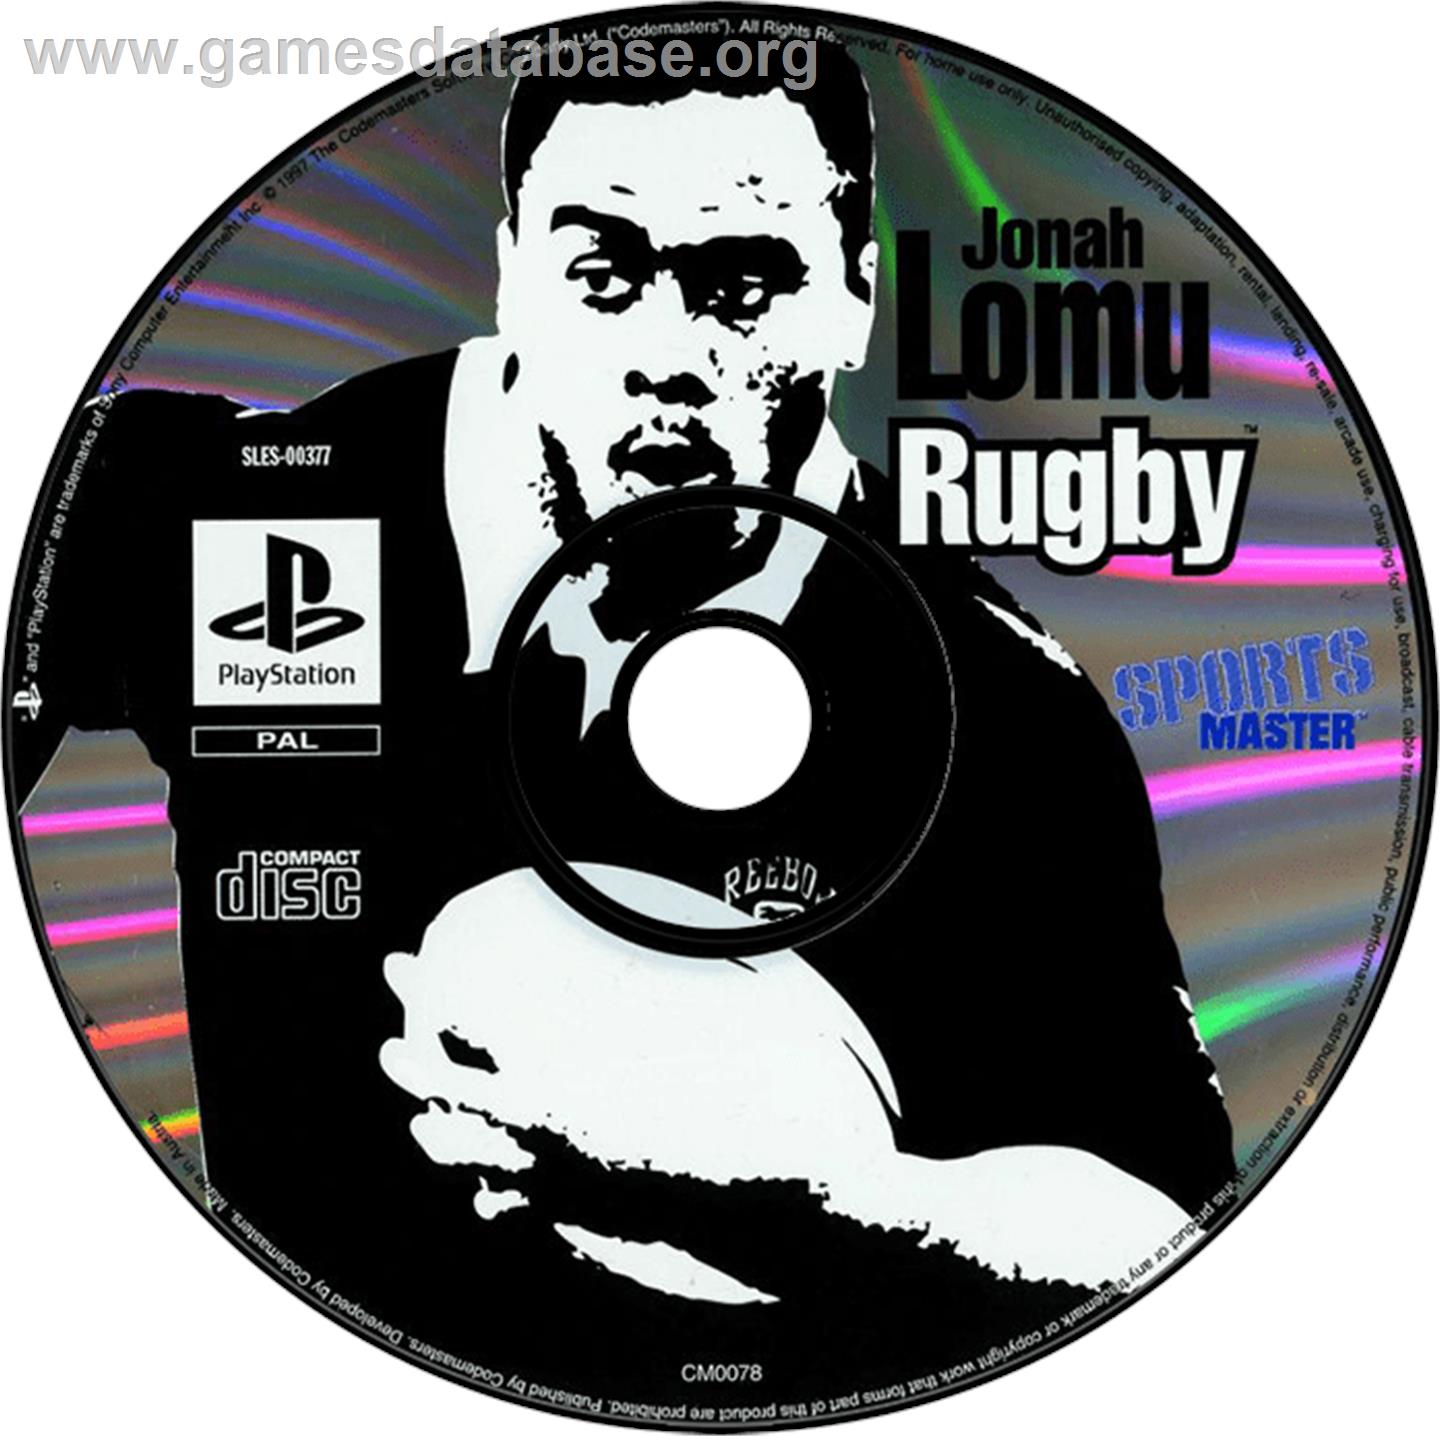 Jonah Lomu Rugby - Sony Playstation - Artwork - Disc